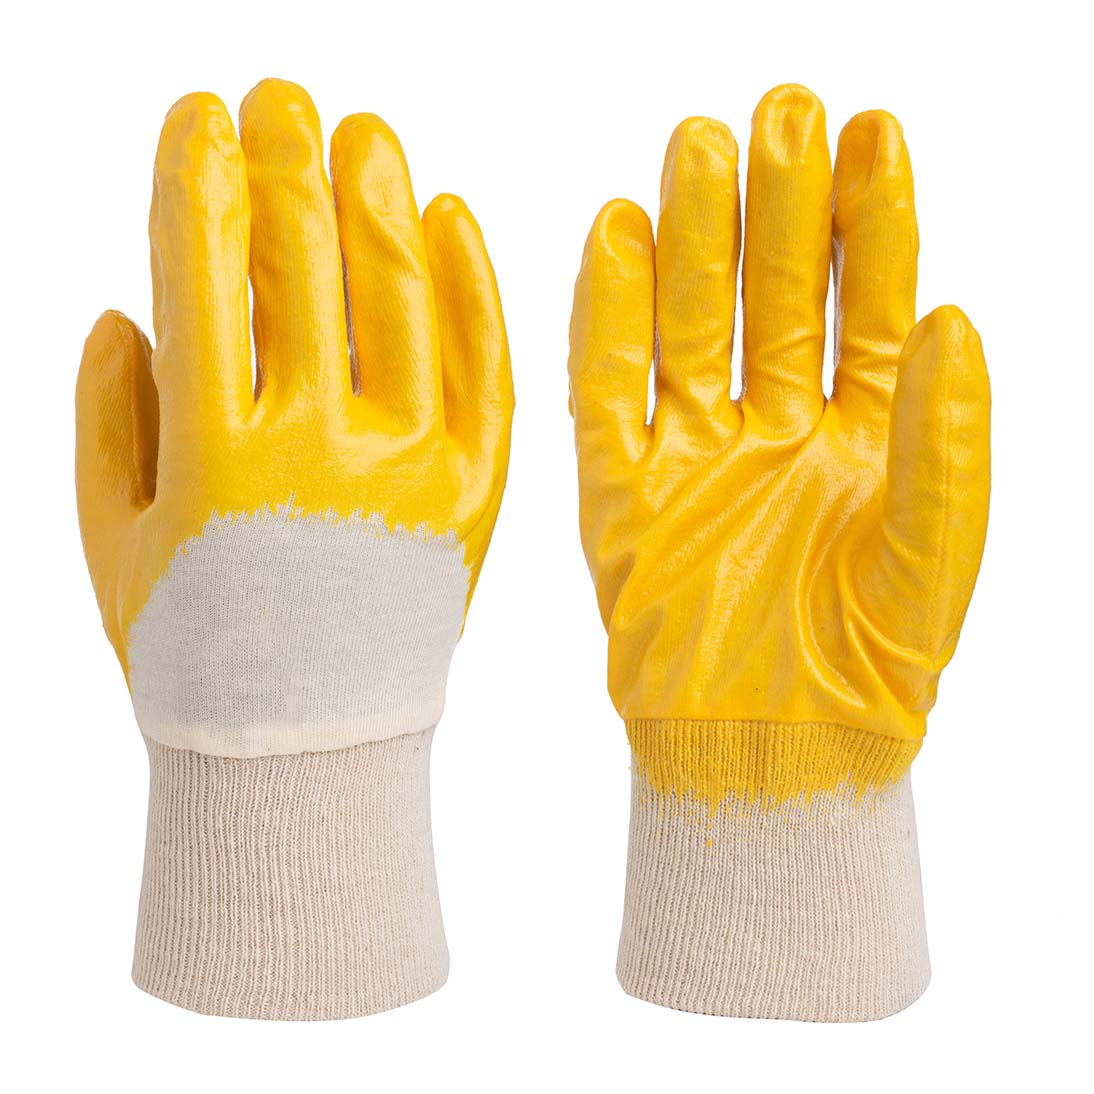 Labouring Gloves,Thermal Gripper Gloves,Best Women's Gloves For Shoveling Snow